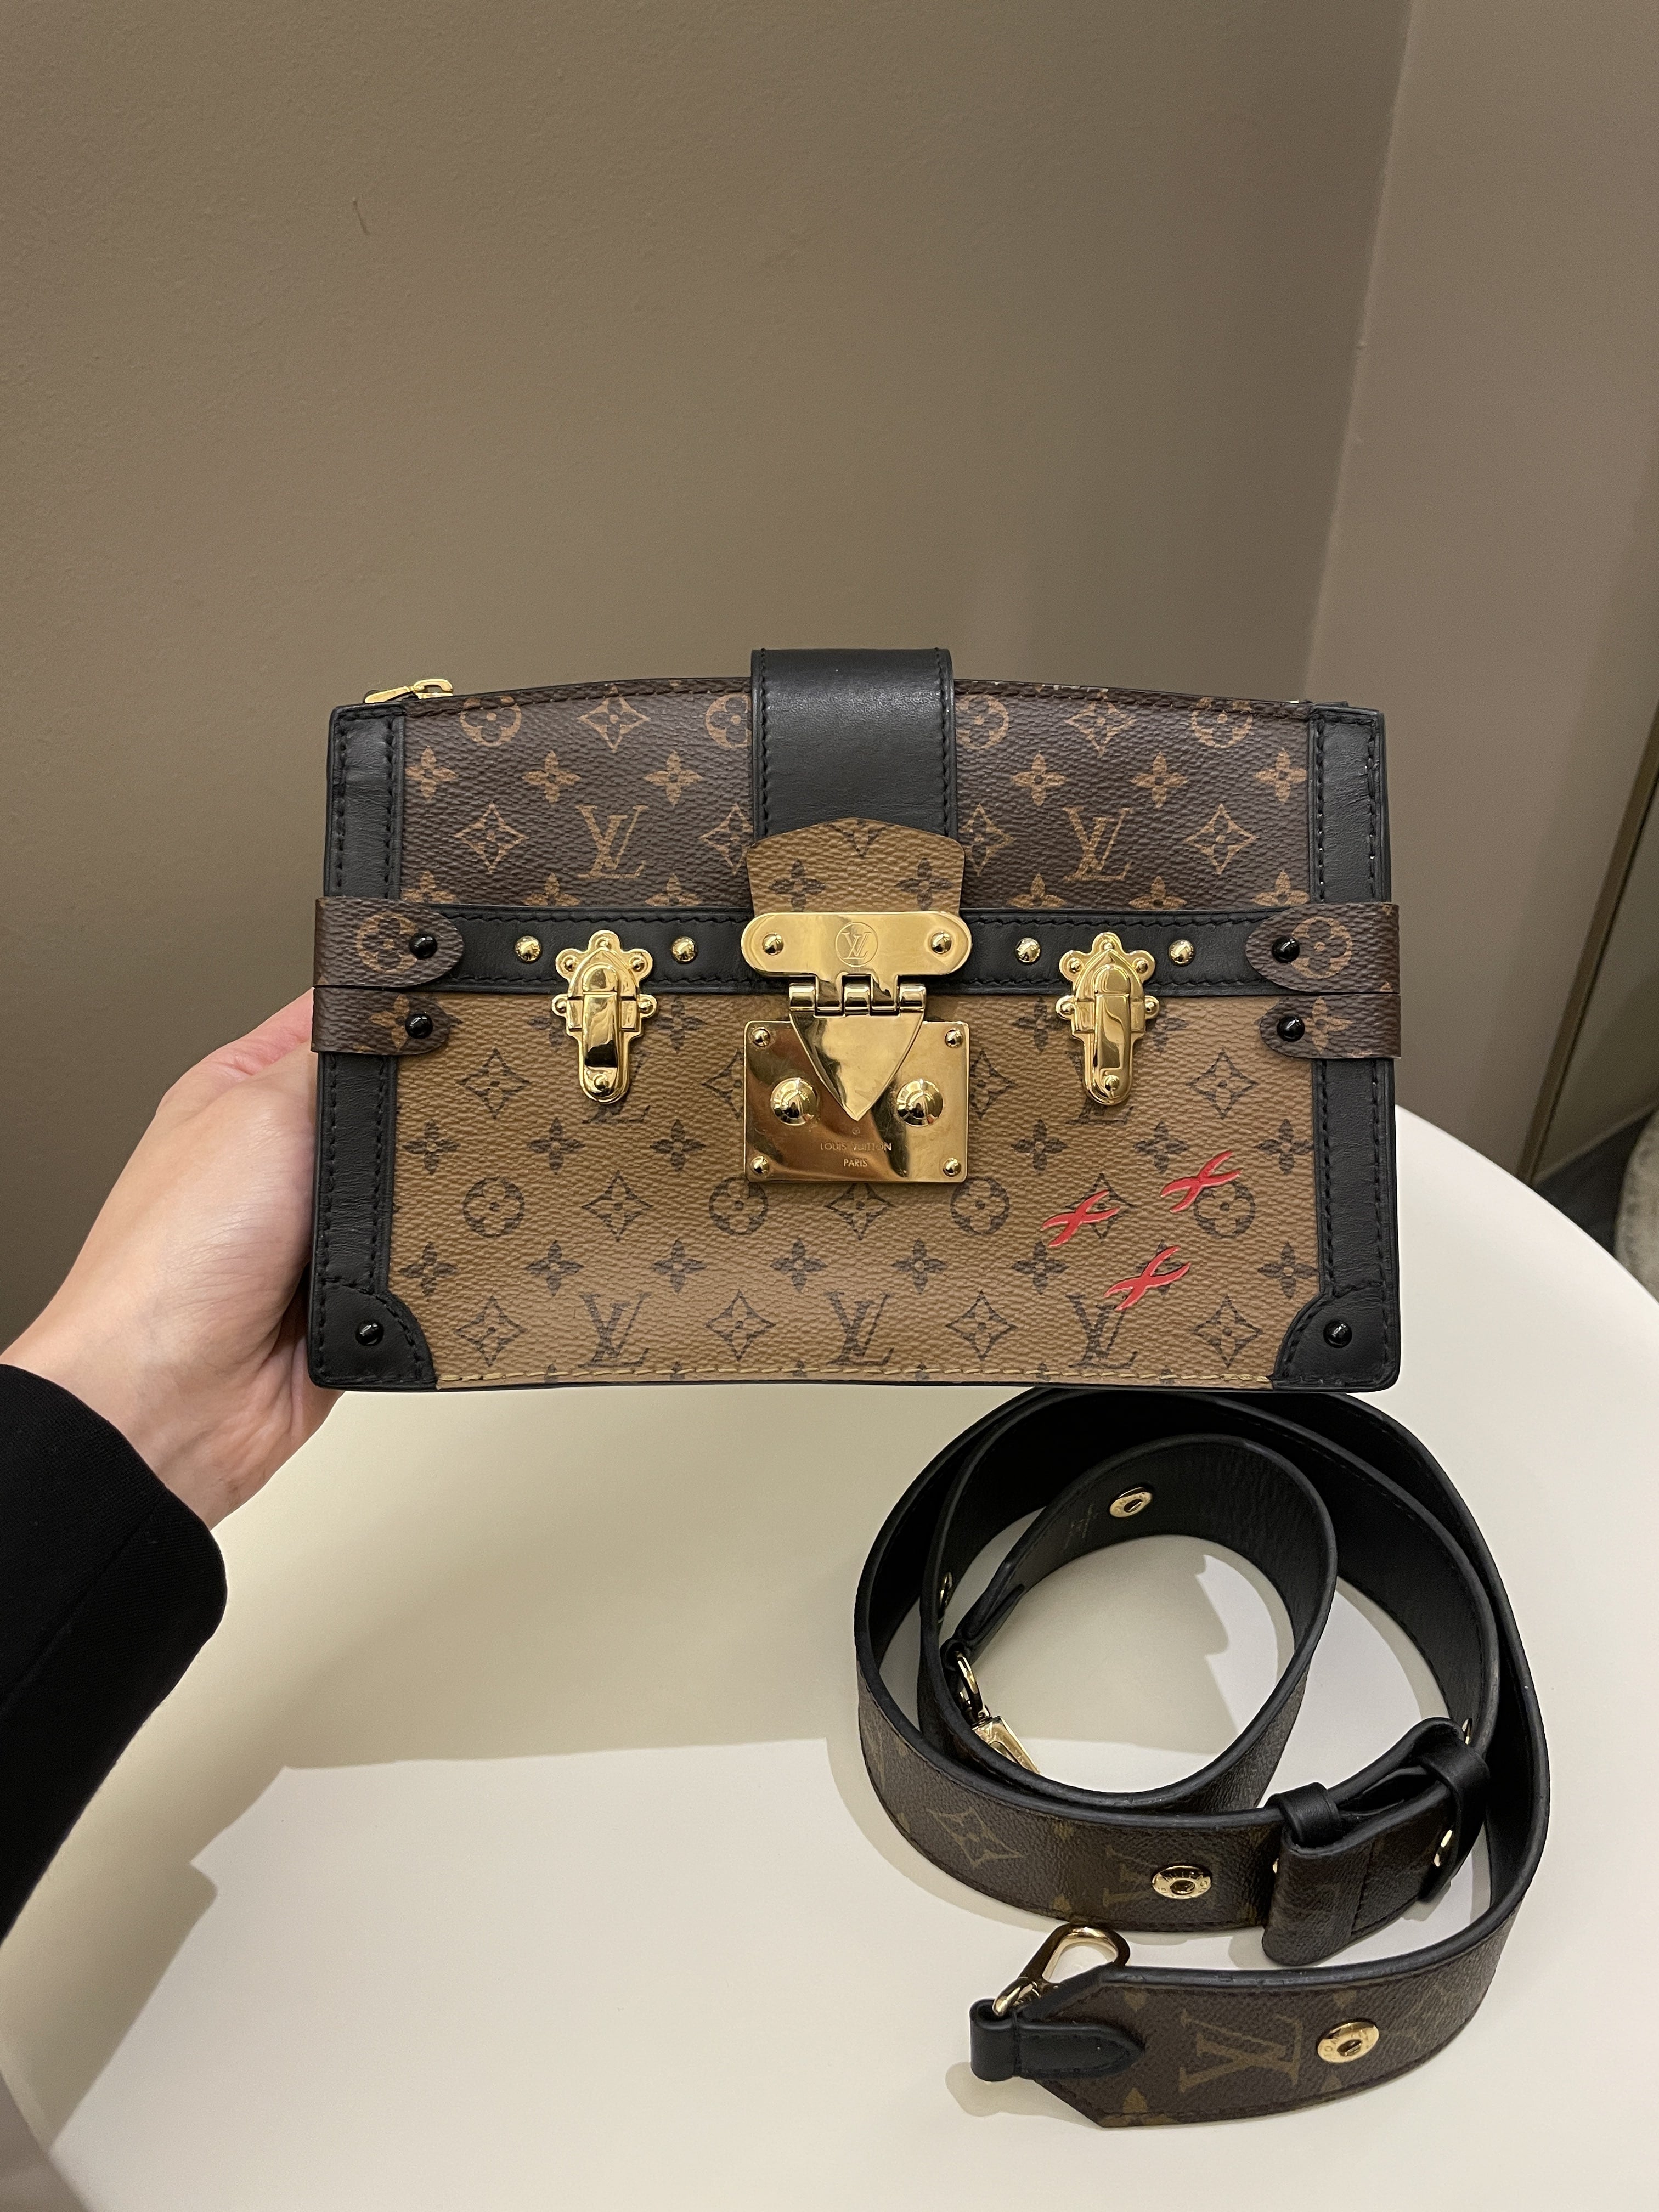 Louis Vuitton Trunk Clutch Bag Review + What Fits Inside